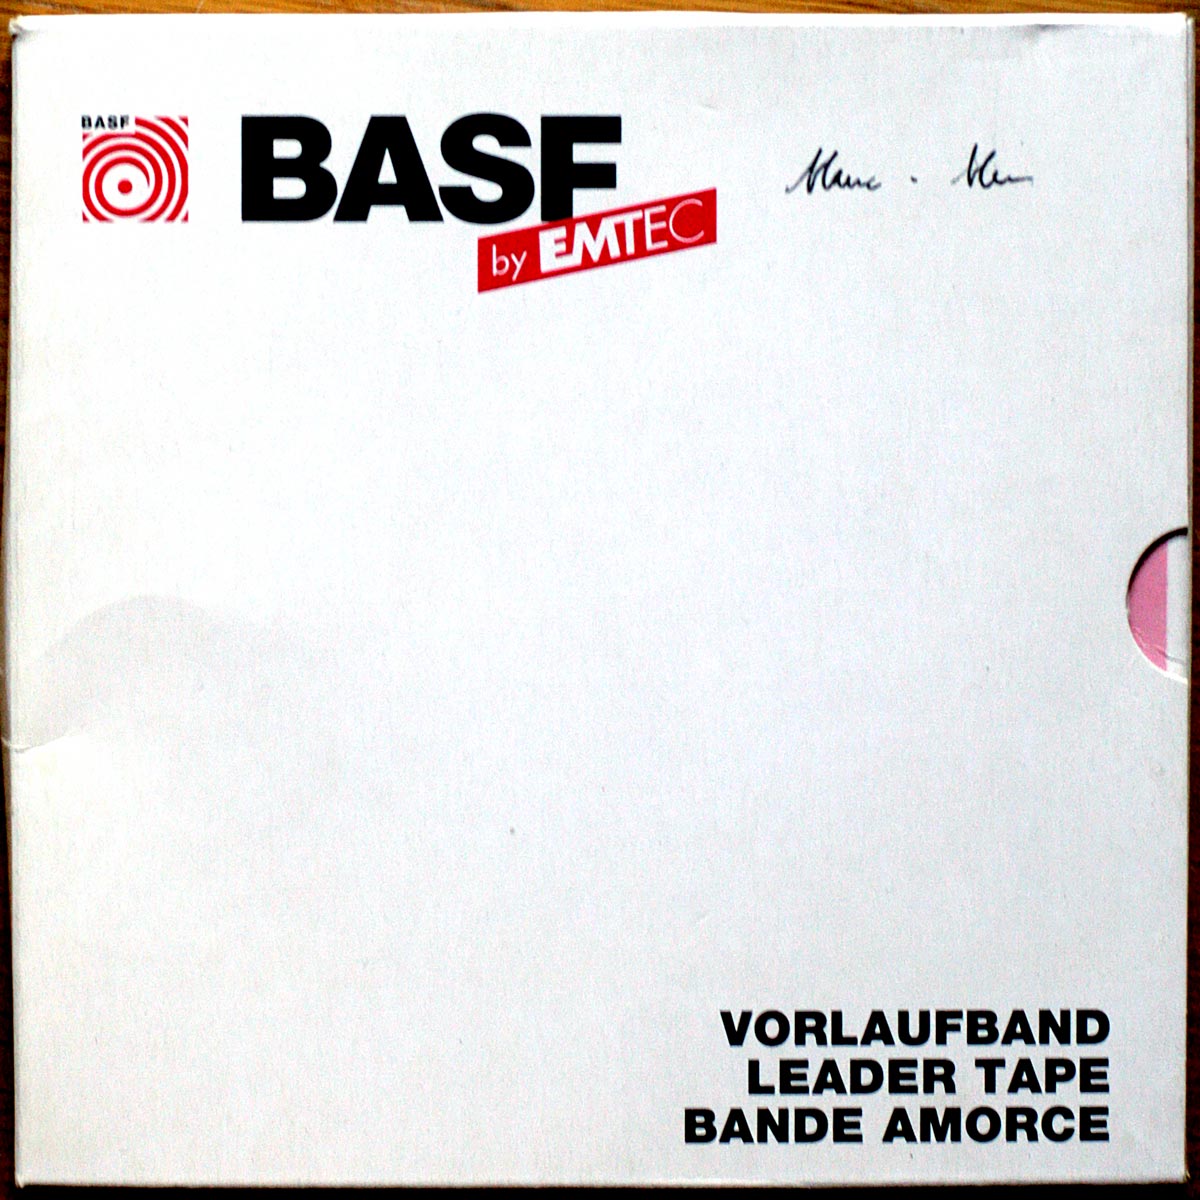 BASF • EMTEC • Bande amorce • Leader tape • Vorlaufband • 250 m • Neuve • New • Neu